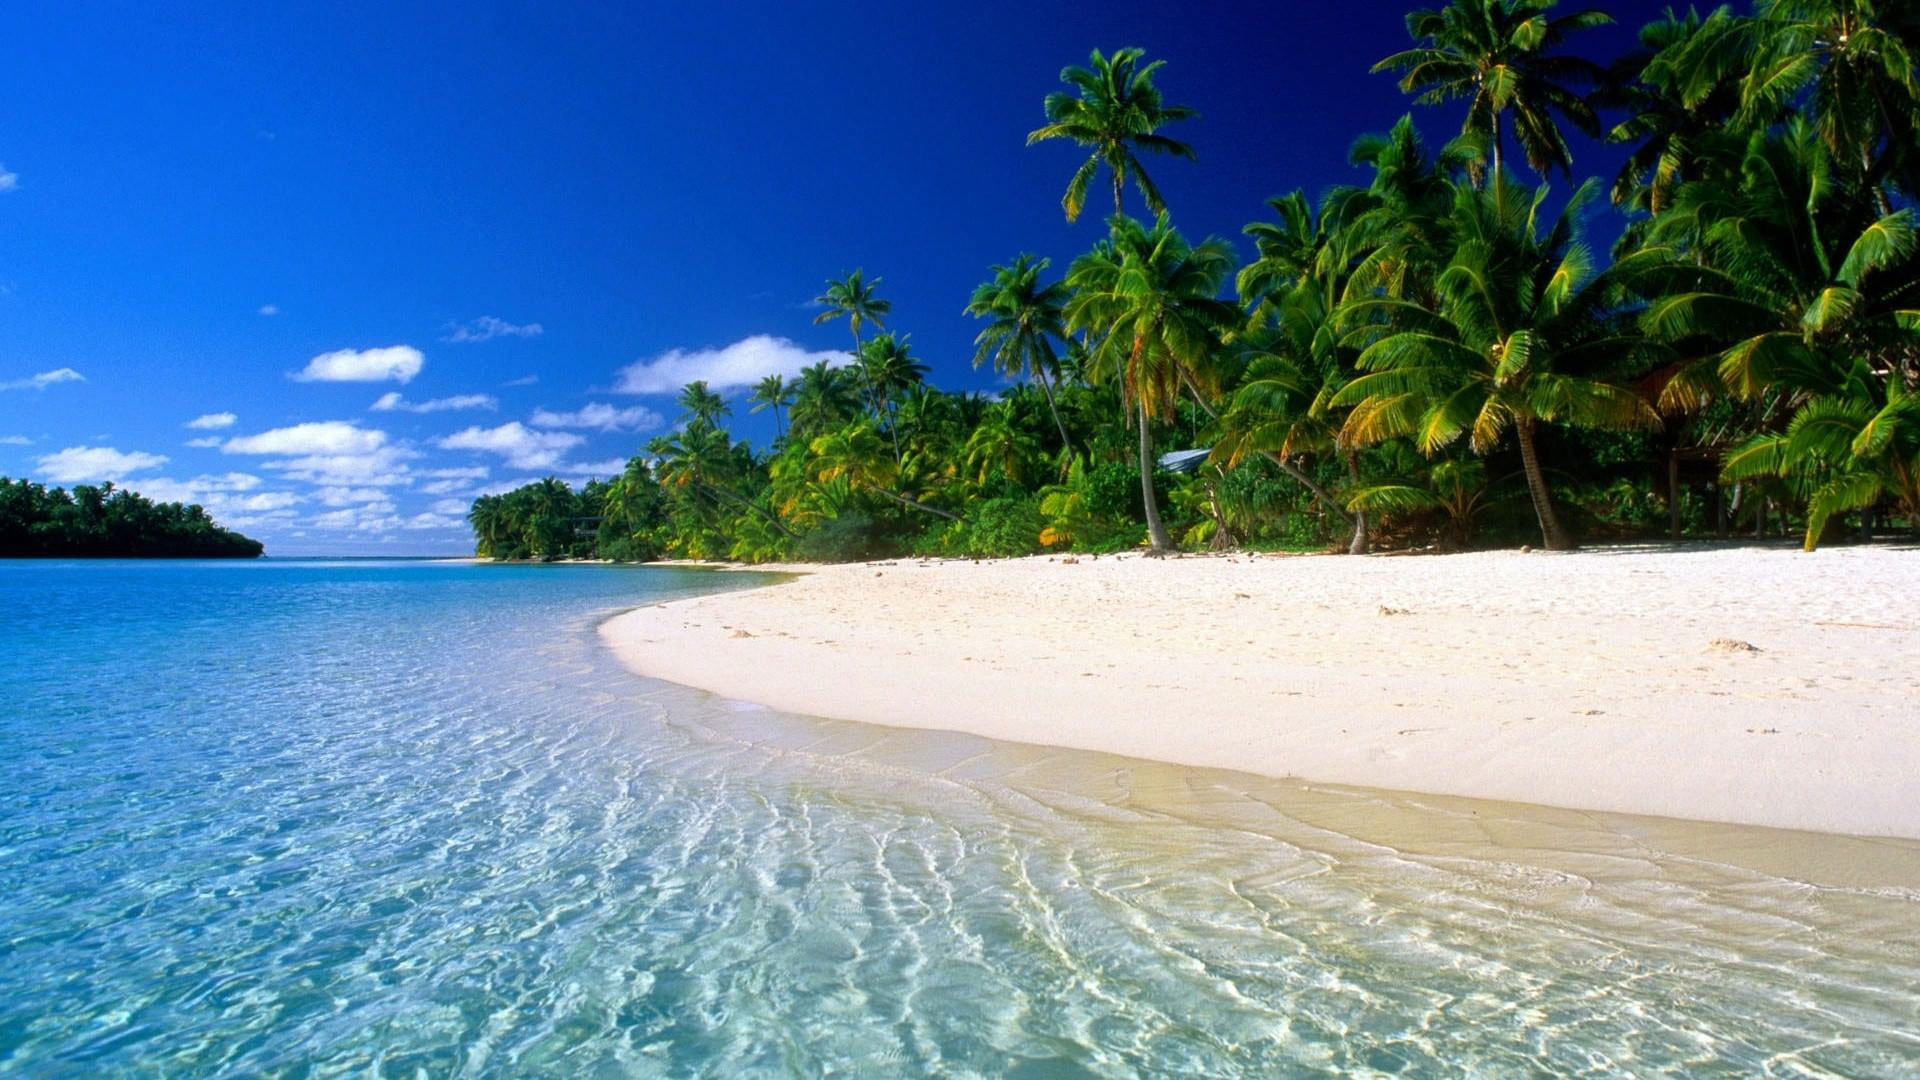 Beach desktop background, water, tropical climate wallpaper